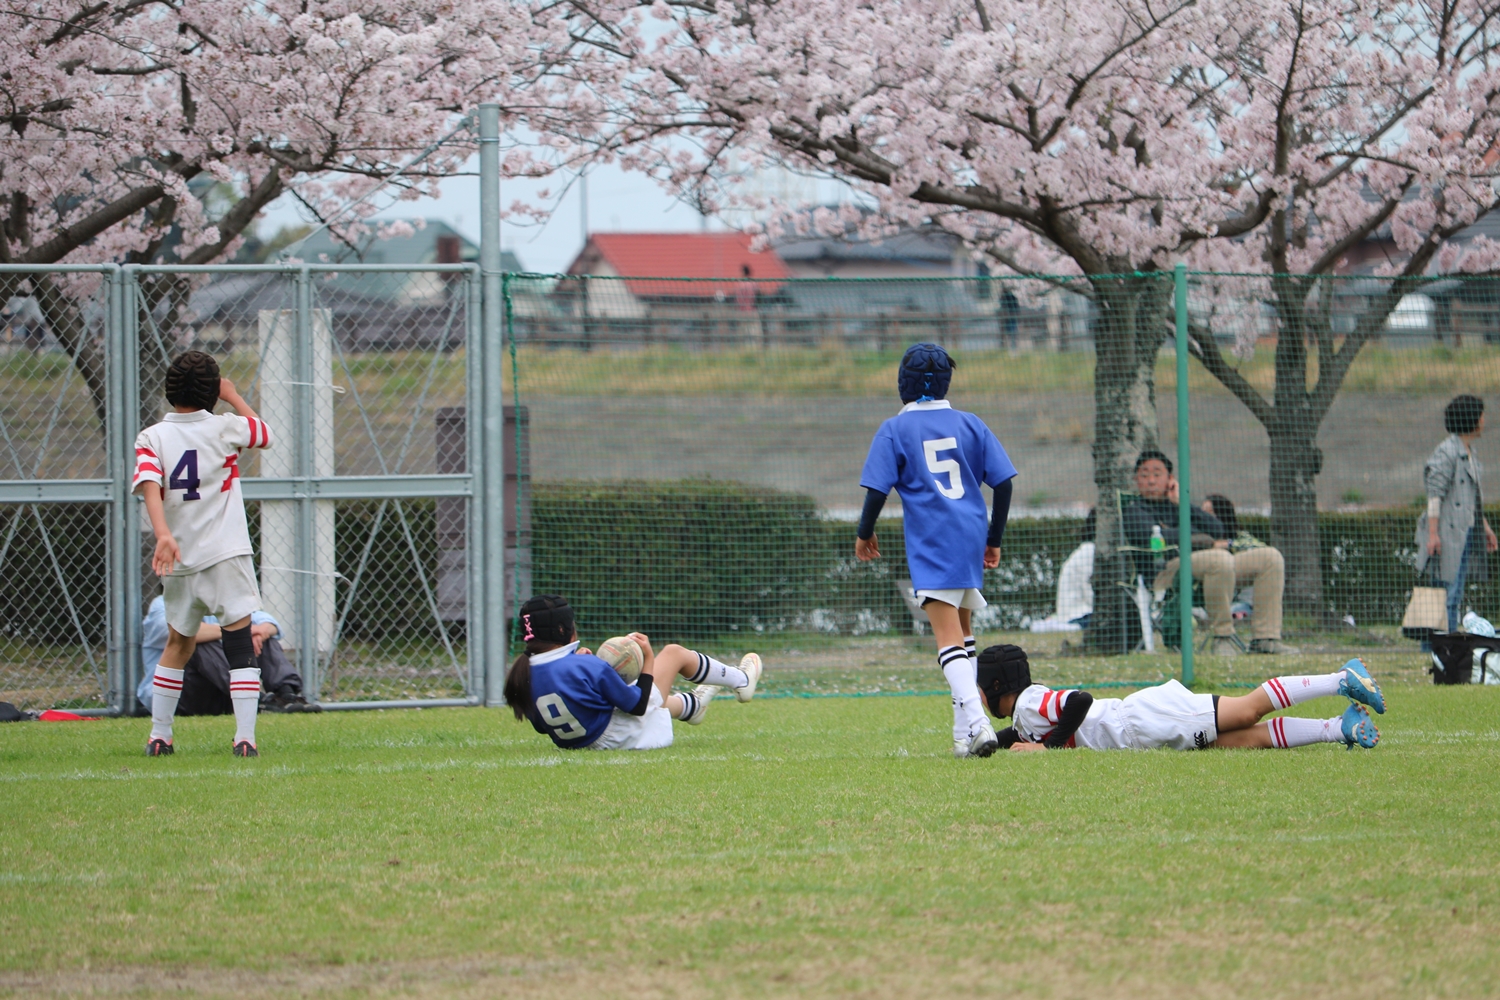 youngwave_kitakyusyu_rugby_school_kasugahai2016087.JPG